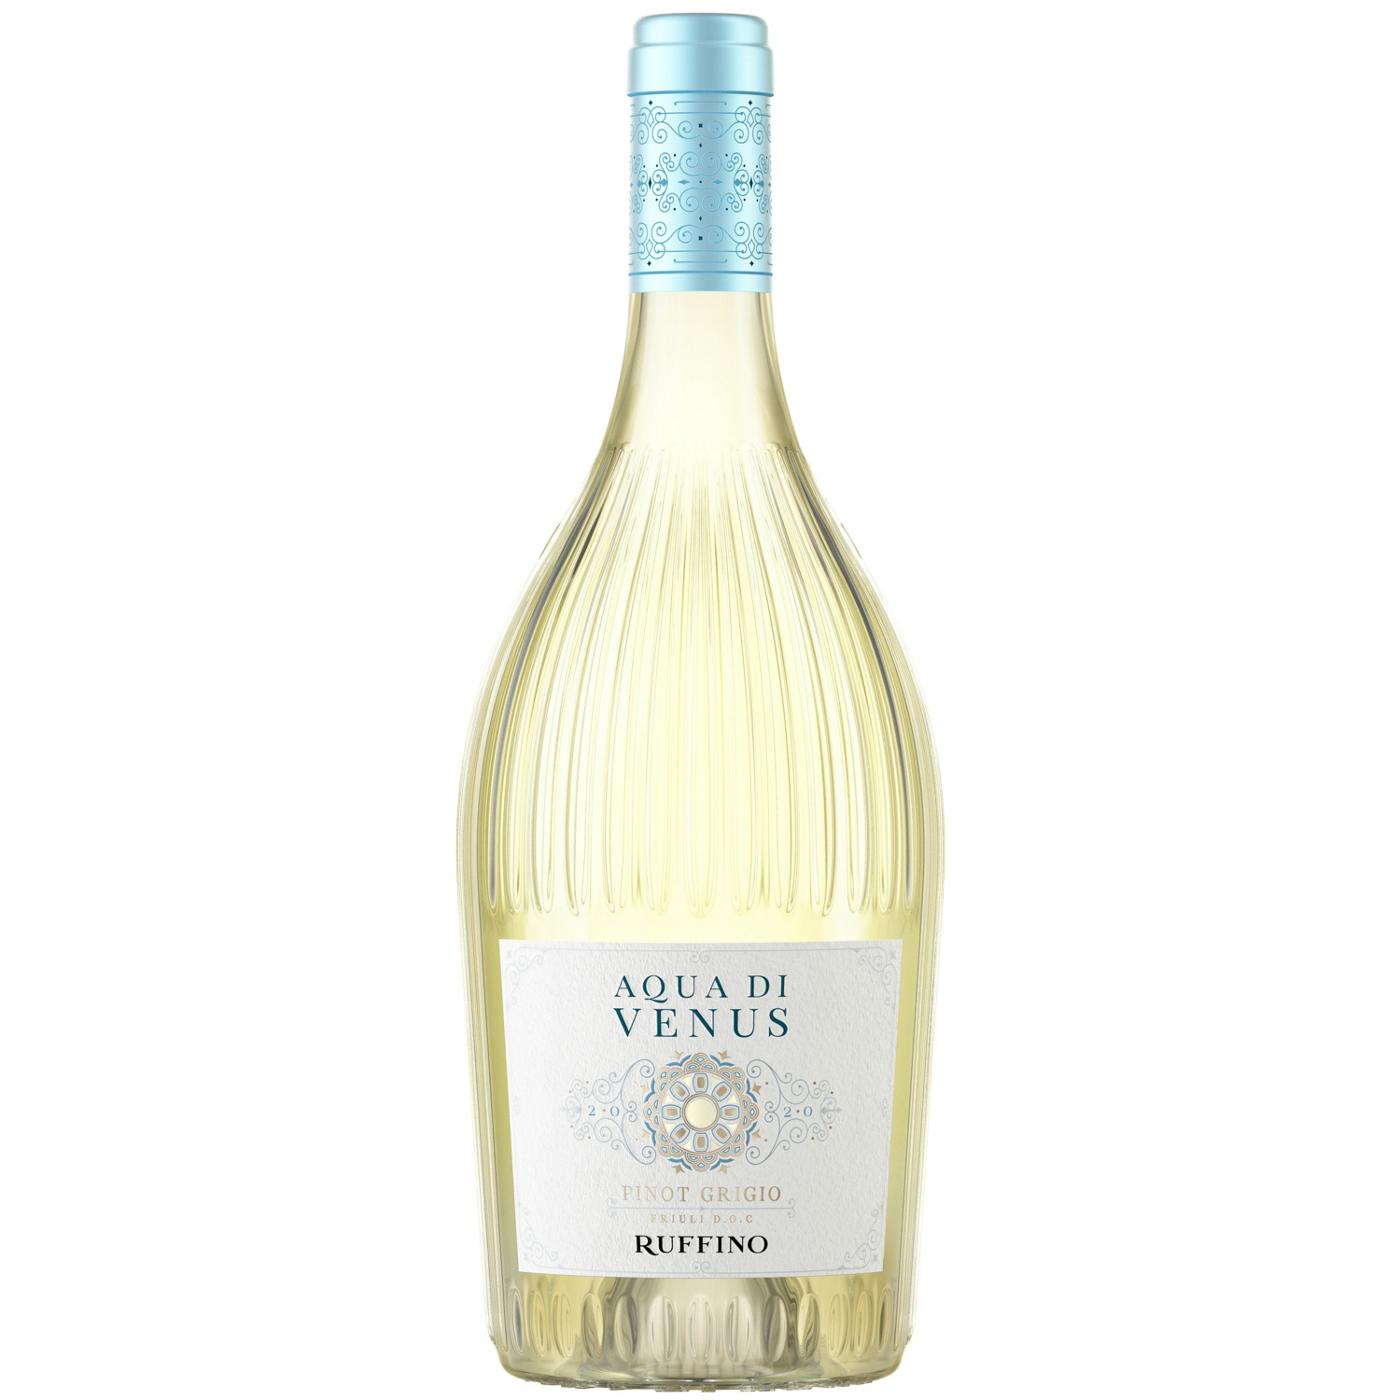 Ruffino Aqua Di Venus DOC Pinot Grigio, Italian White Wine 750 mL Bottle; image 1 of 5